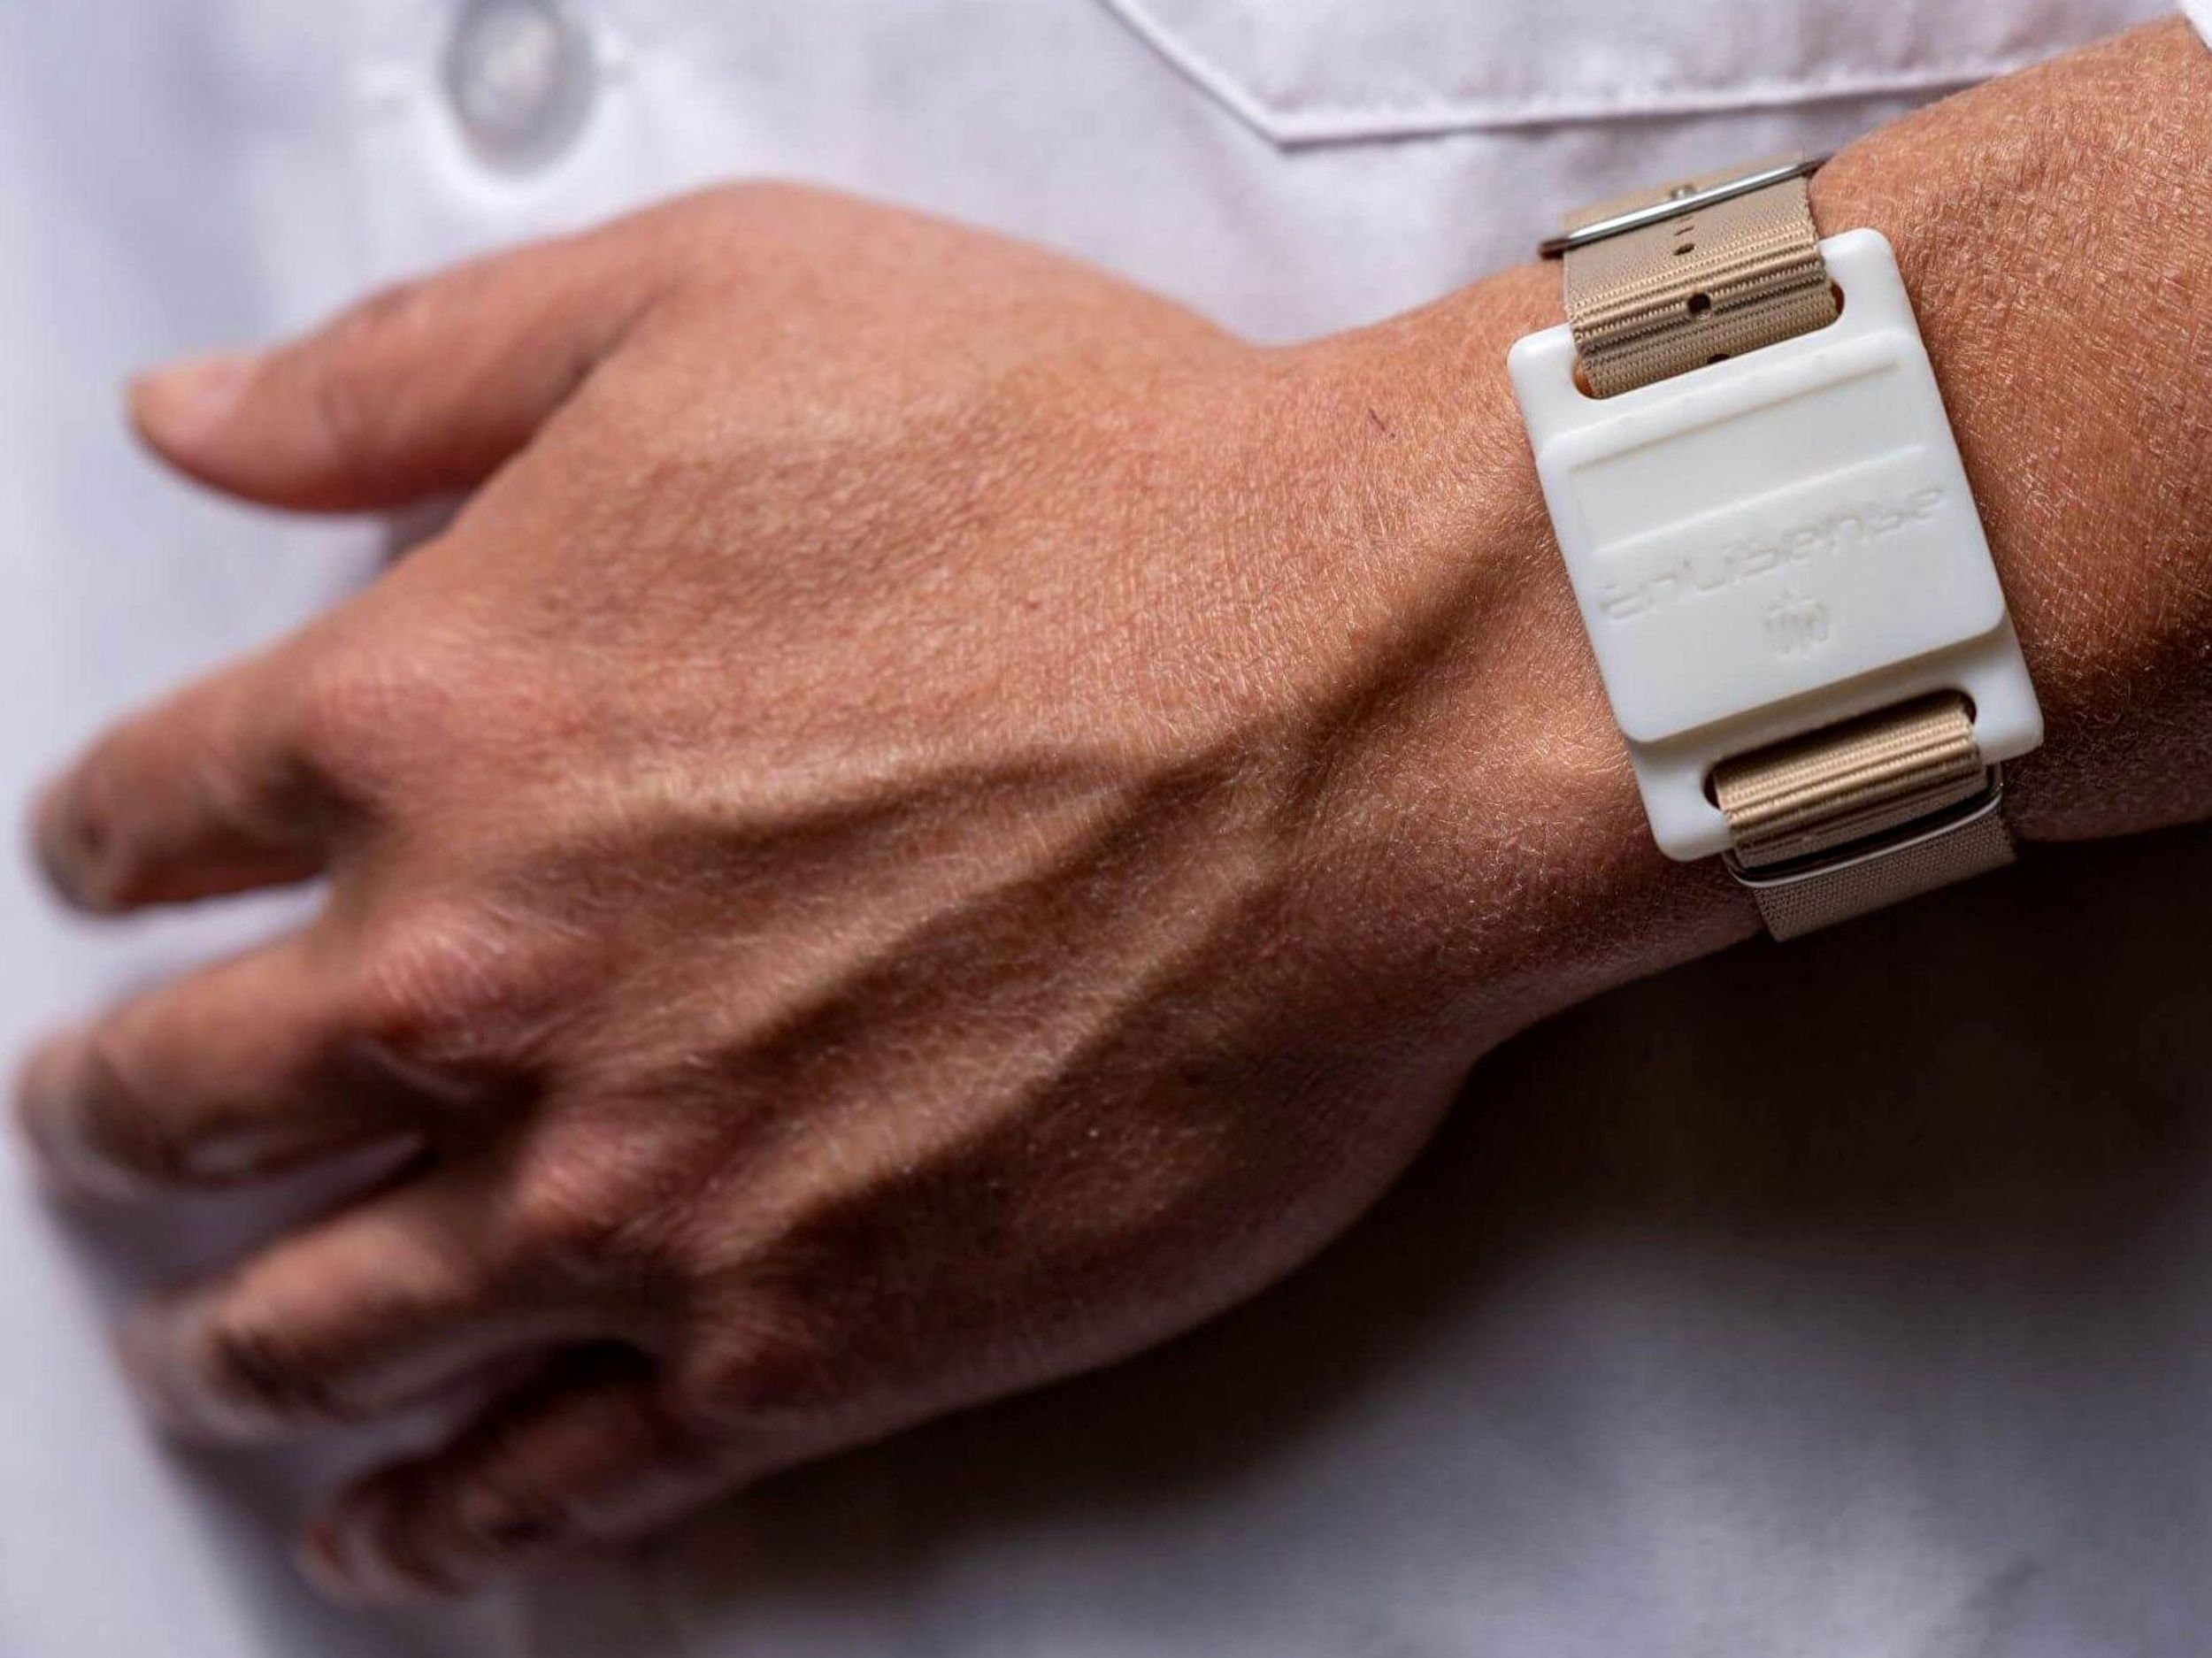 Enlisense sweat sensor watch on person's wrist